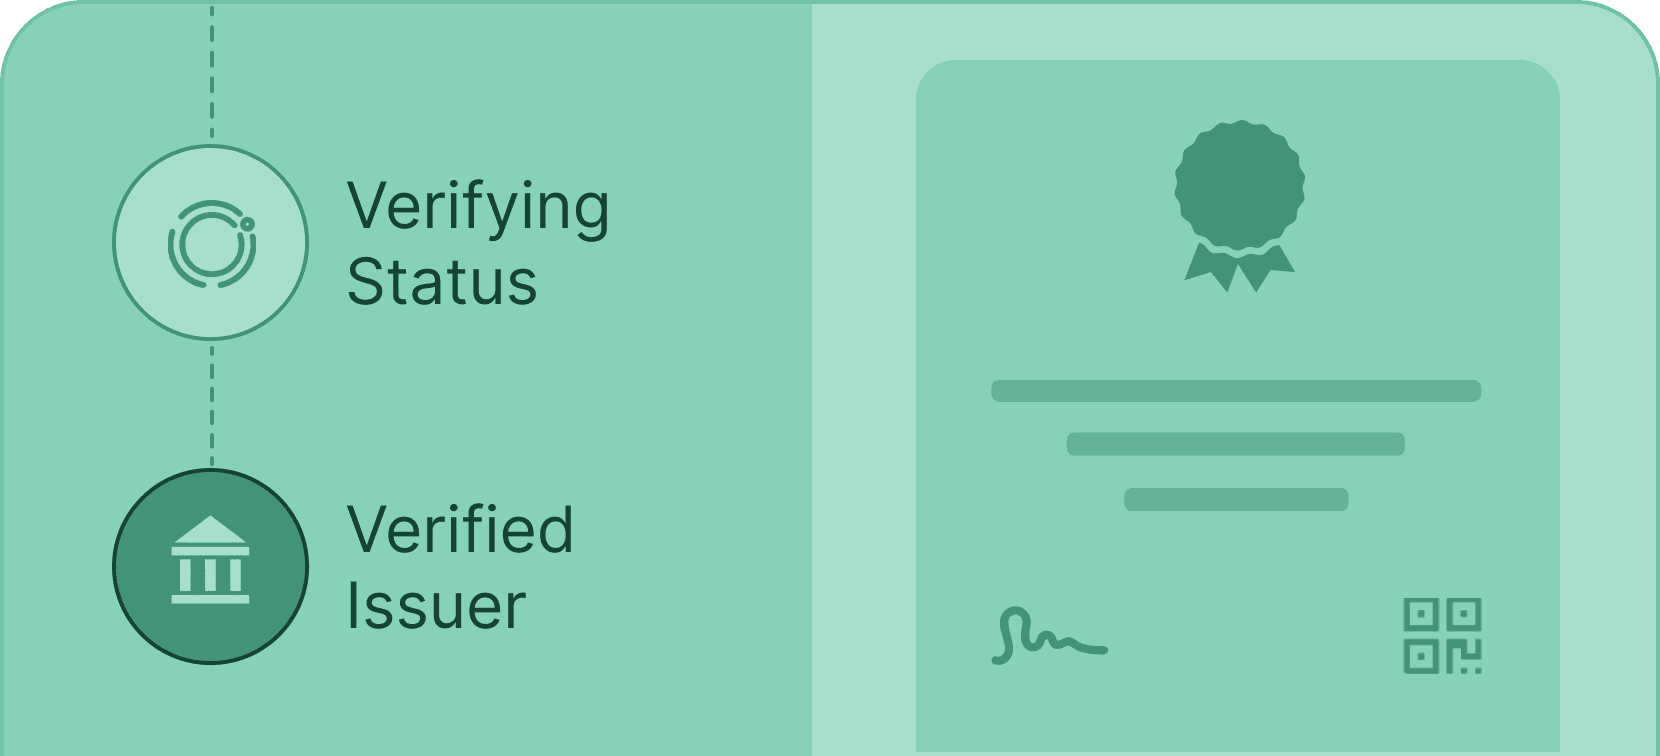 certifier-features-verify-issuer-status